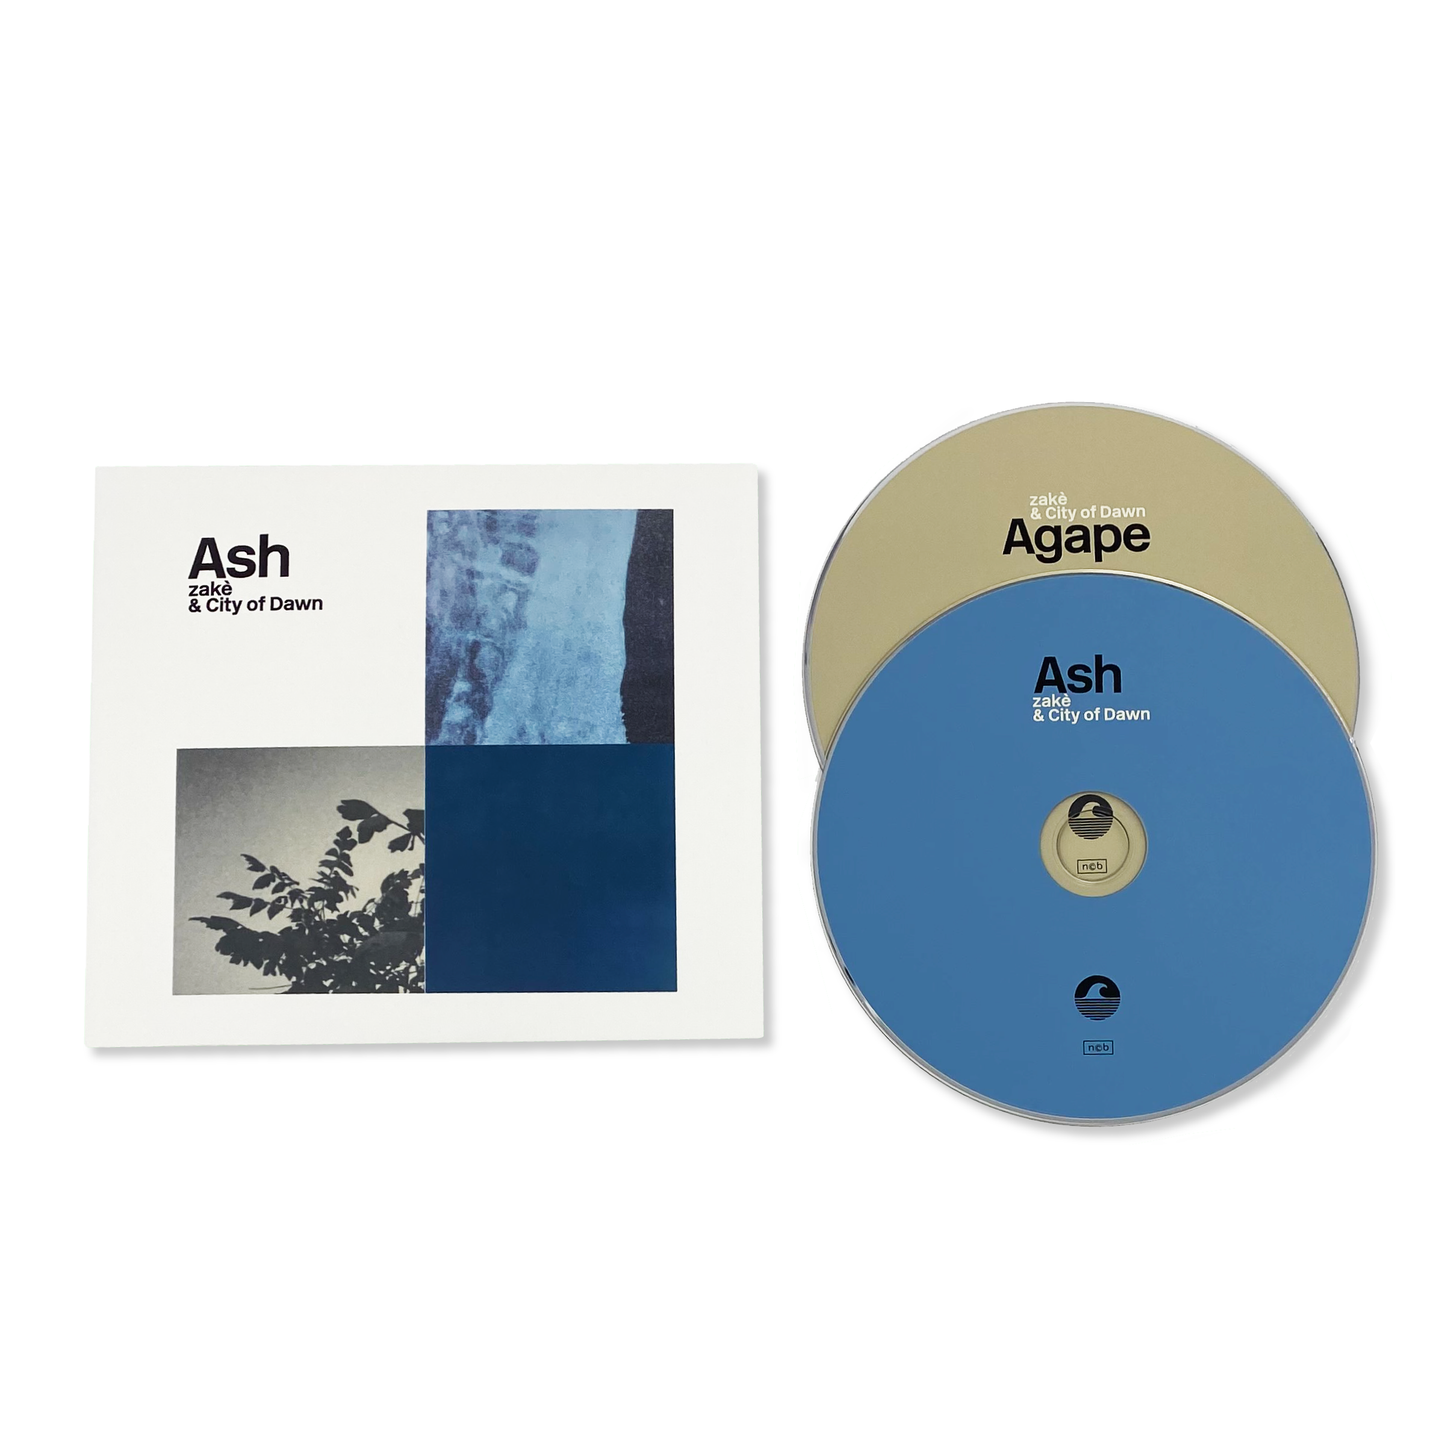 zakè & City of Dawn 'Ash/Agape' [2CD] (EU import)